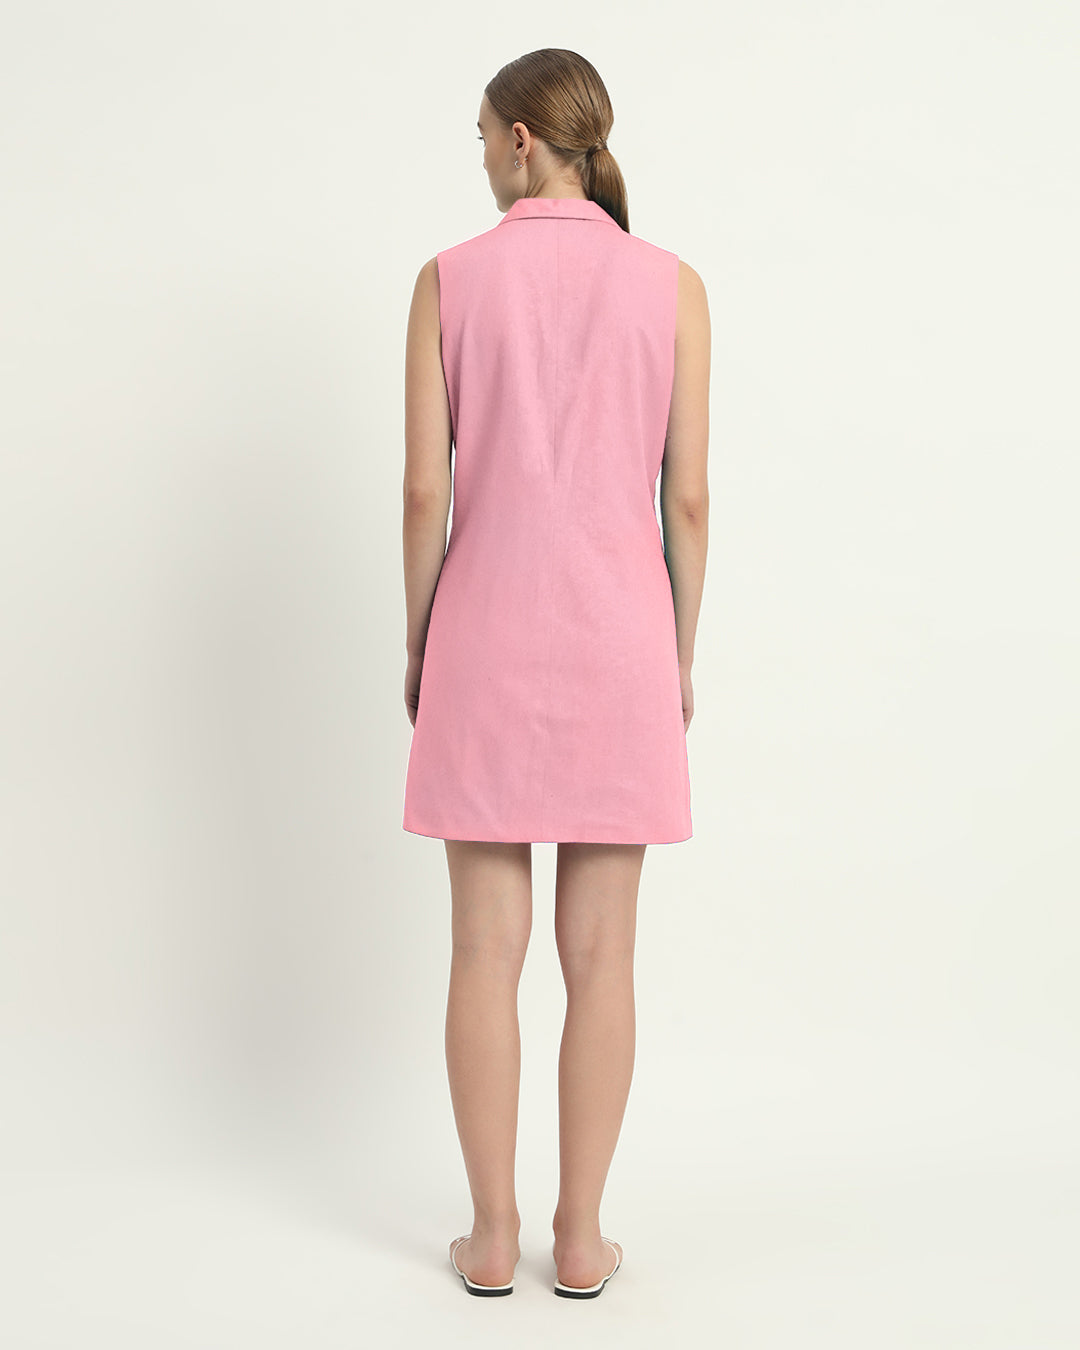 The Fondant Pink Vernon Cotton Dress